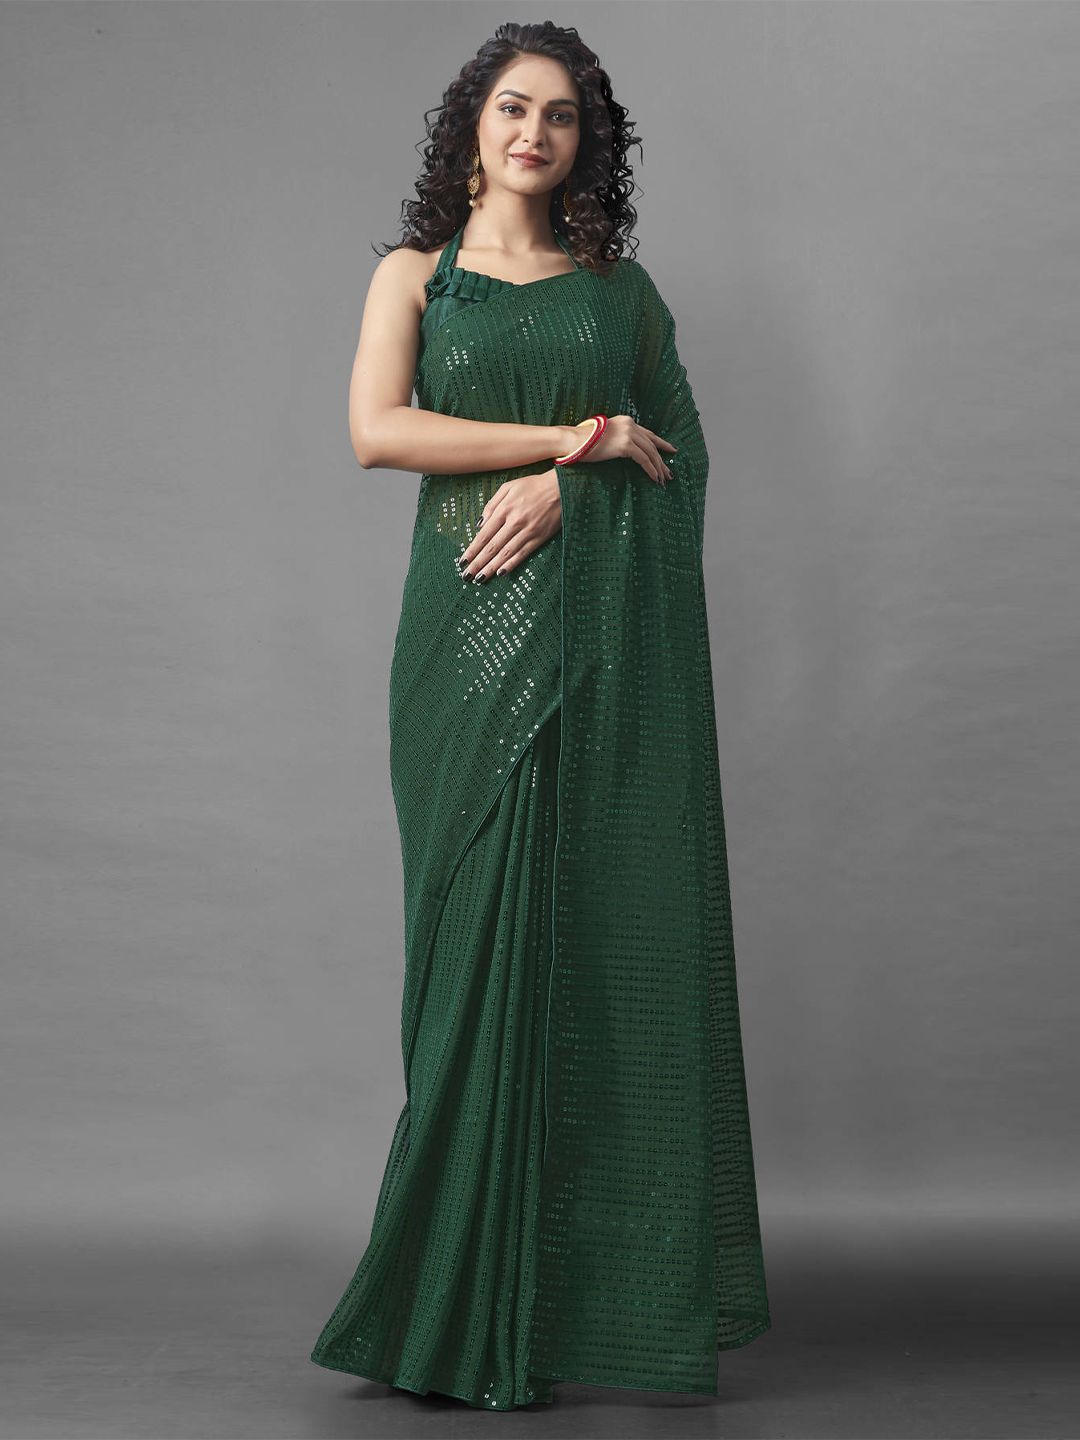 nirja Fab Green Embellished Sequinned Saree Price in India